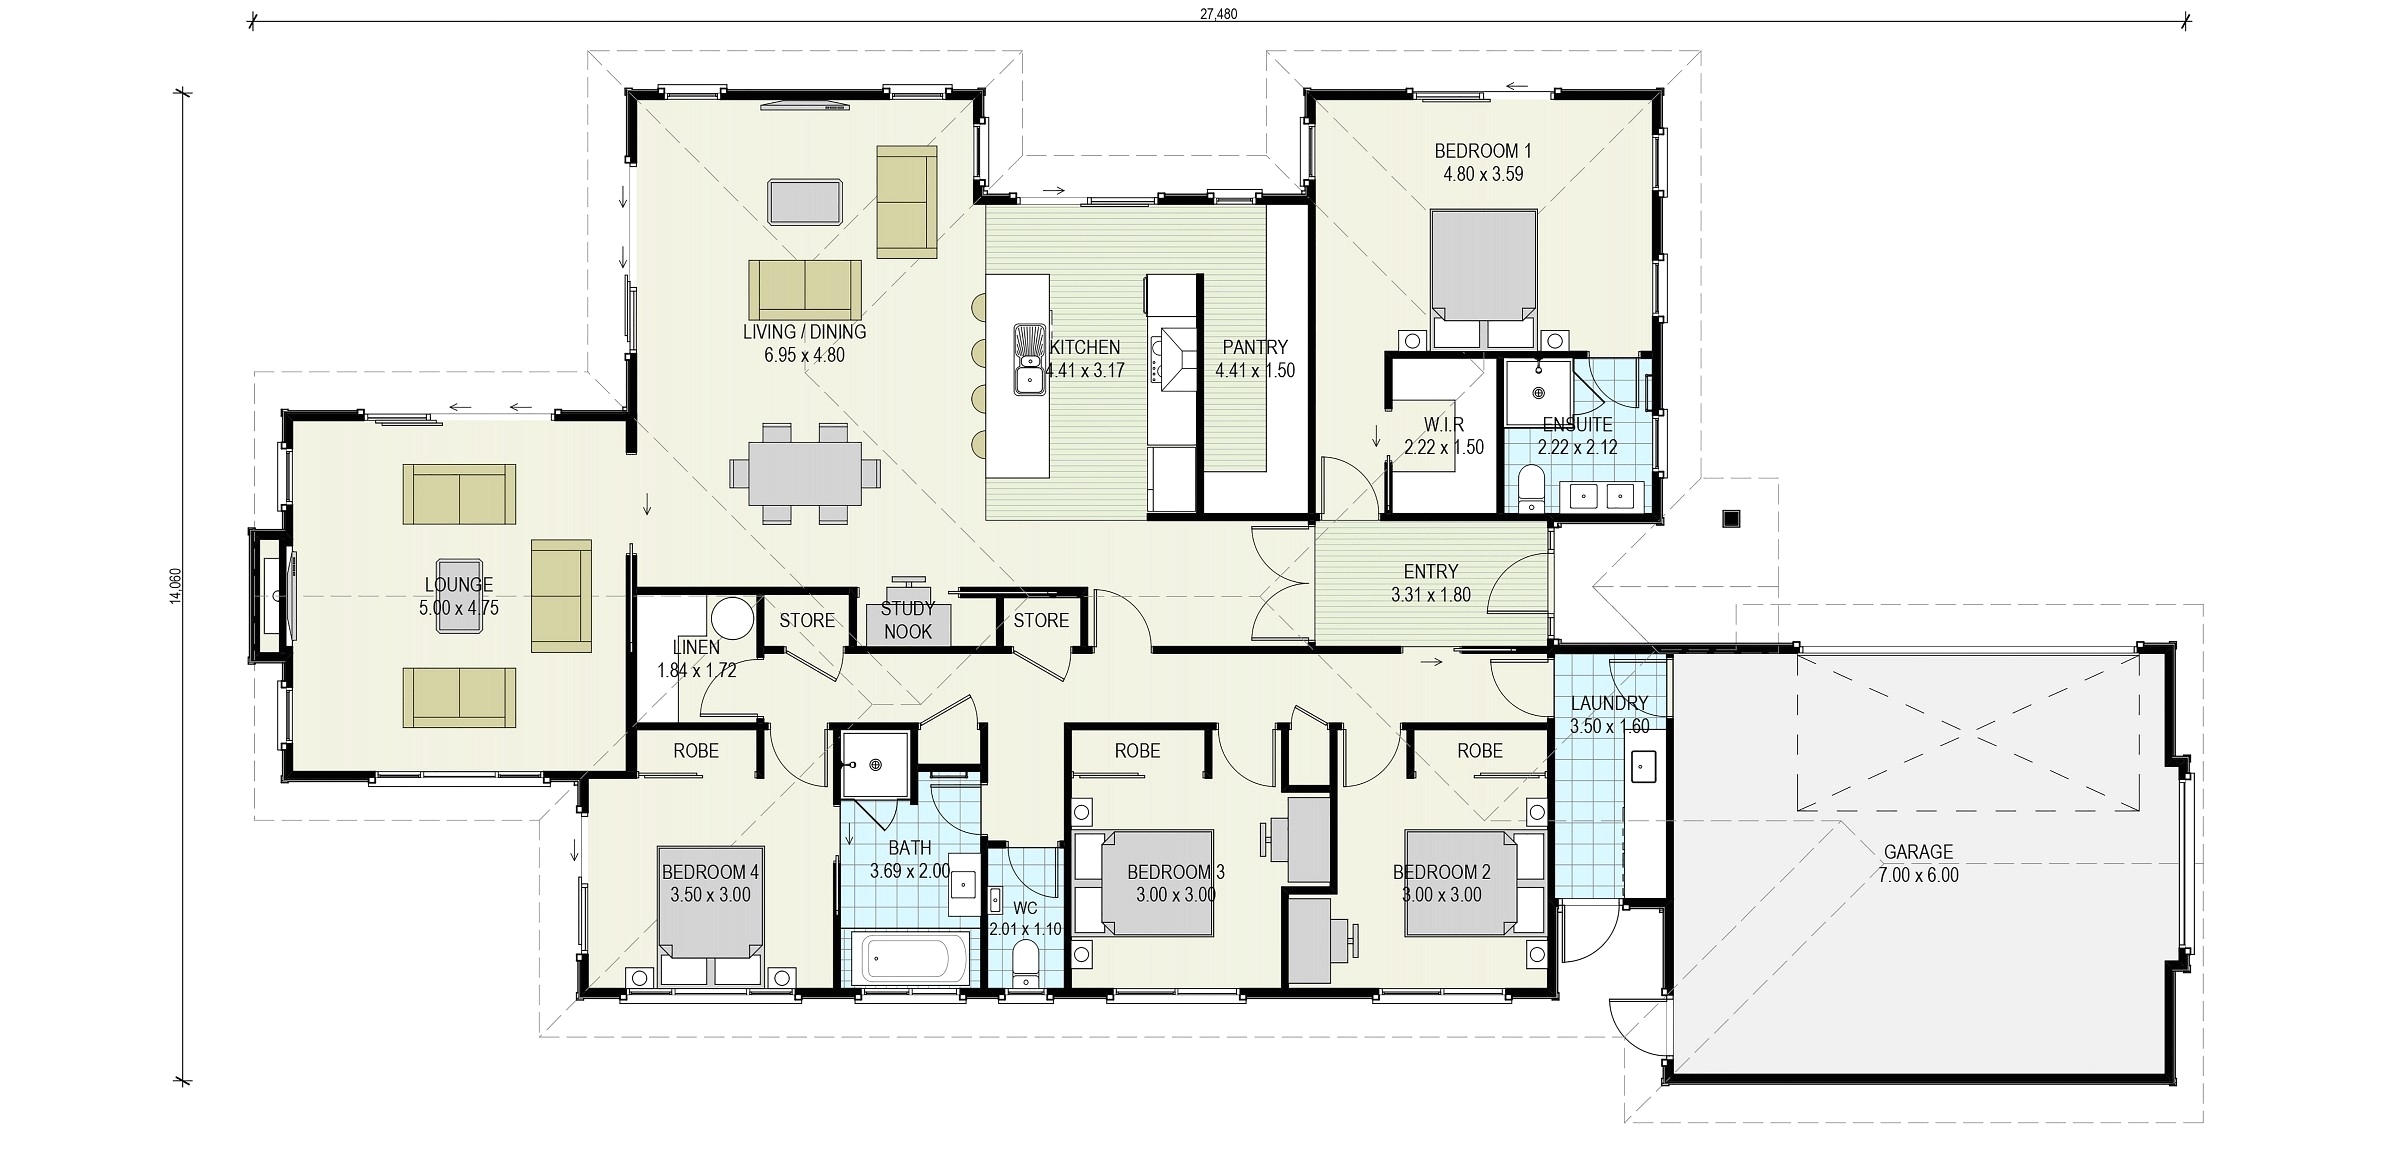 3 bedroom rv floor plan rv floor plans